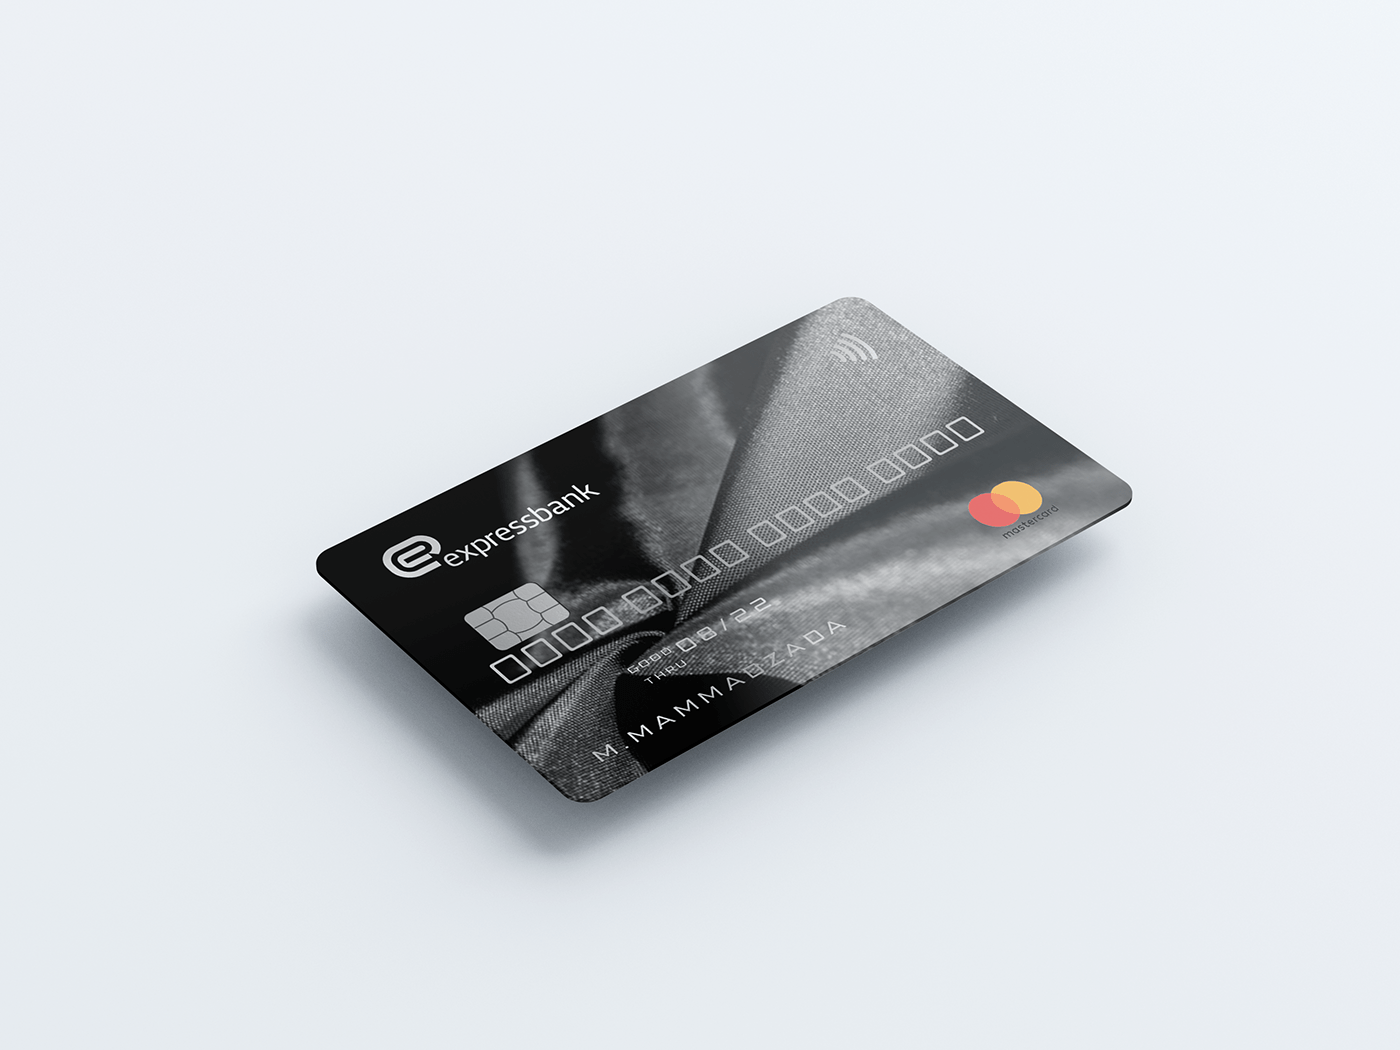 Bank credit card card design design Platinum